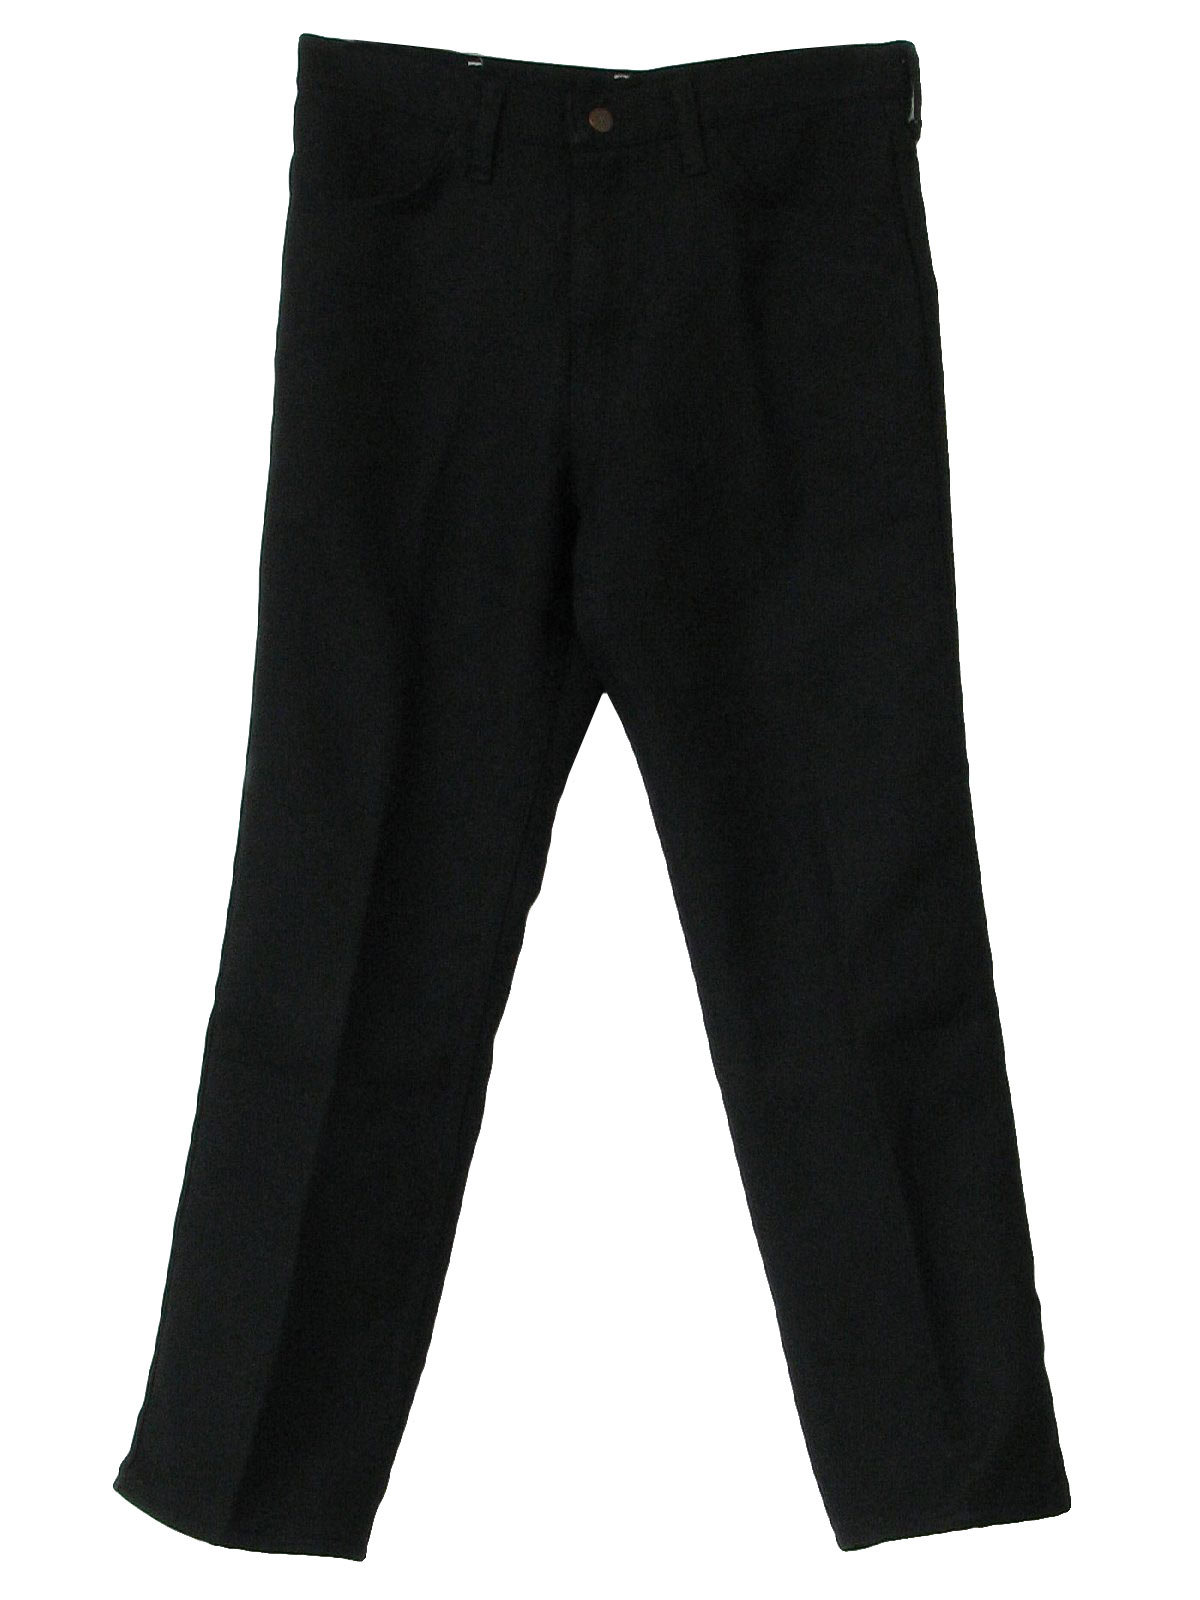 Retro 1980's Pants (Wrangler) : 80s -Wrangler- Mens black polyester ...